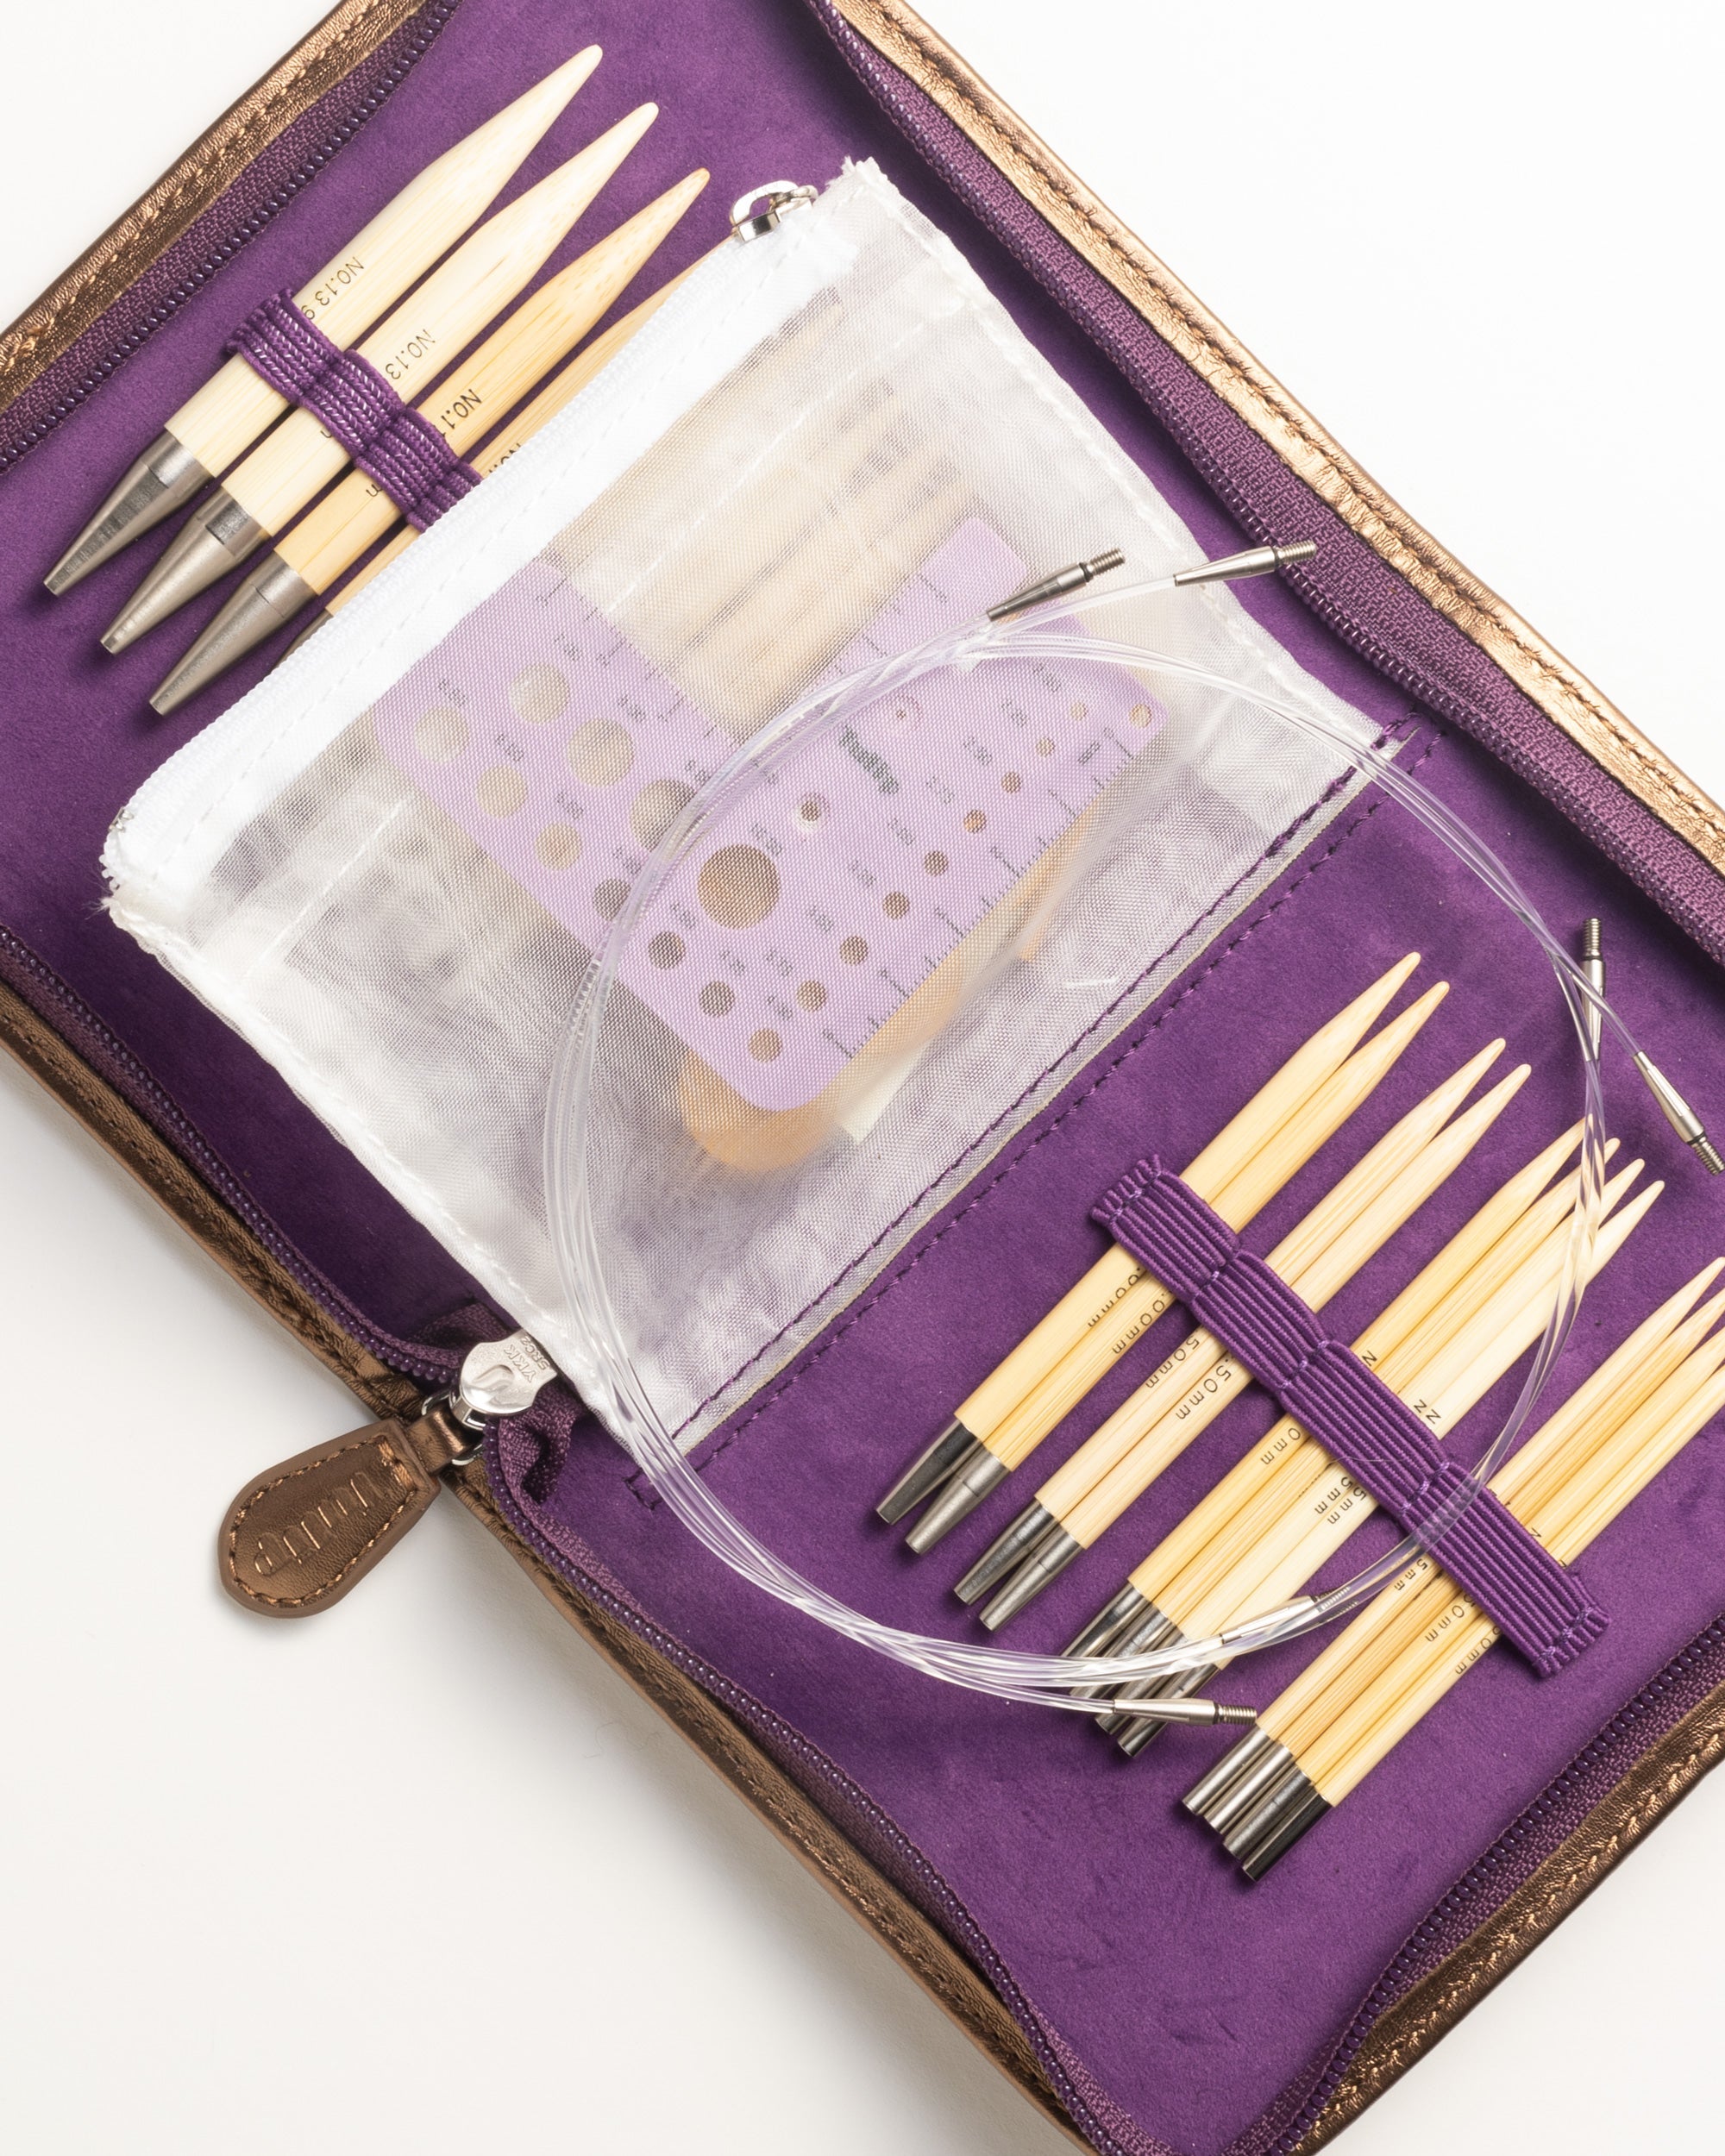 Interchangeable Knitting Needle Sets